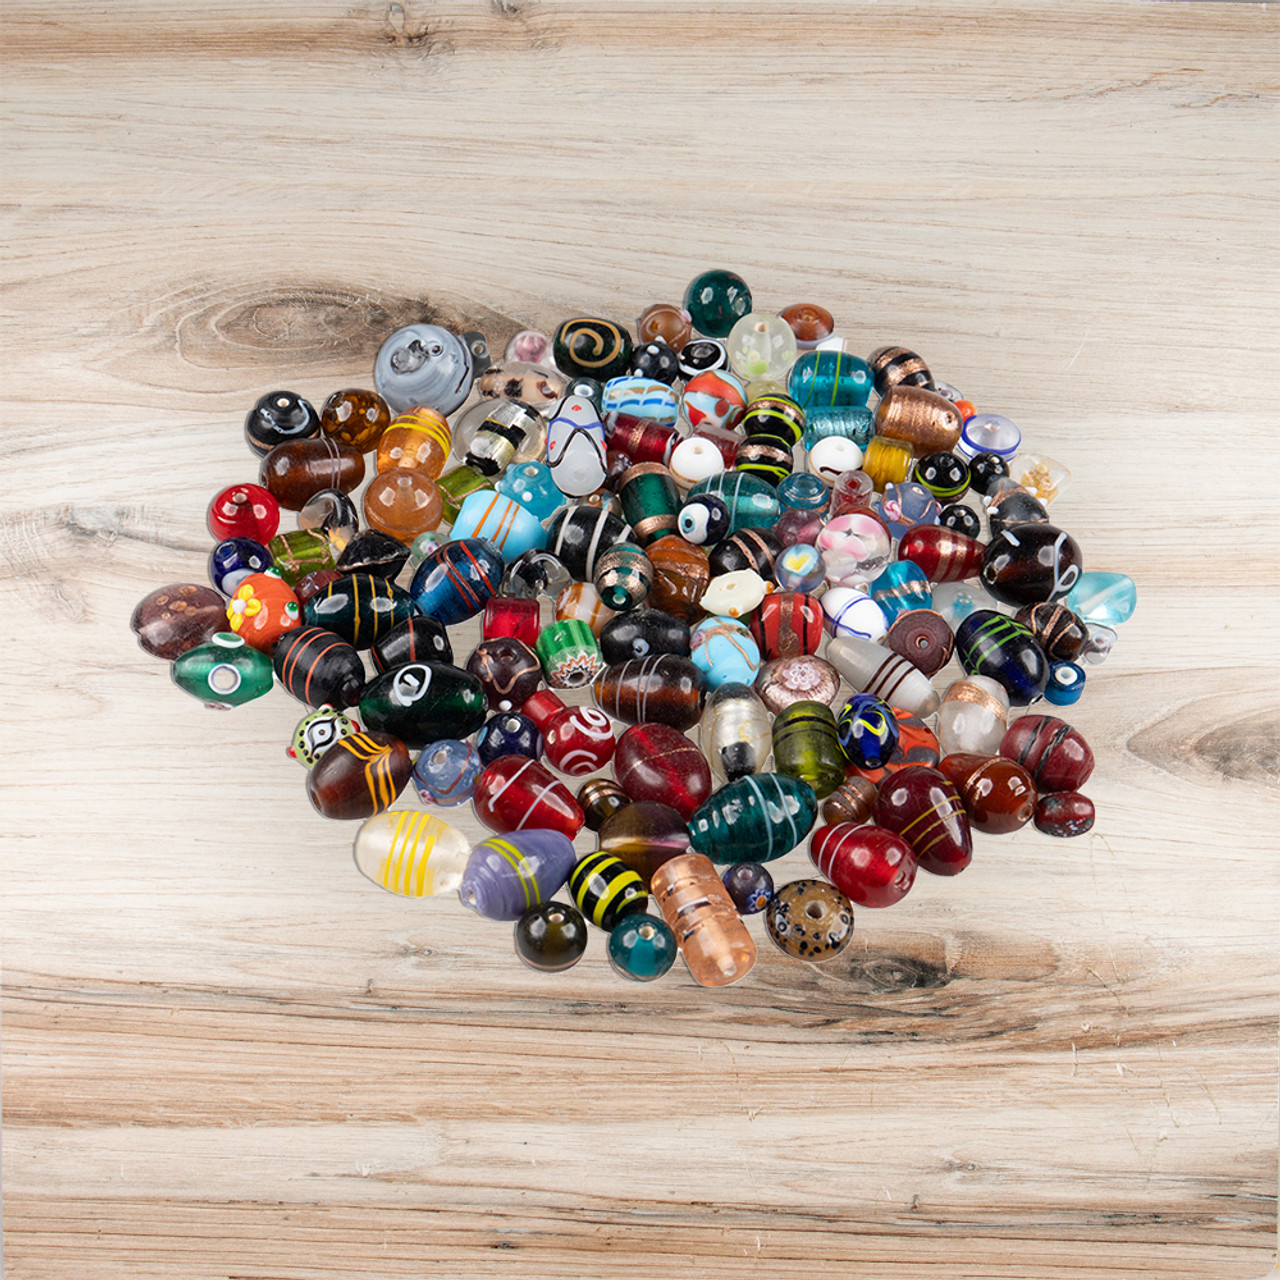 Assorted Round Glass Beads - 1 LB Bag